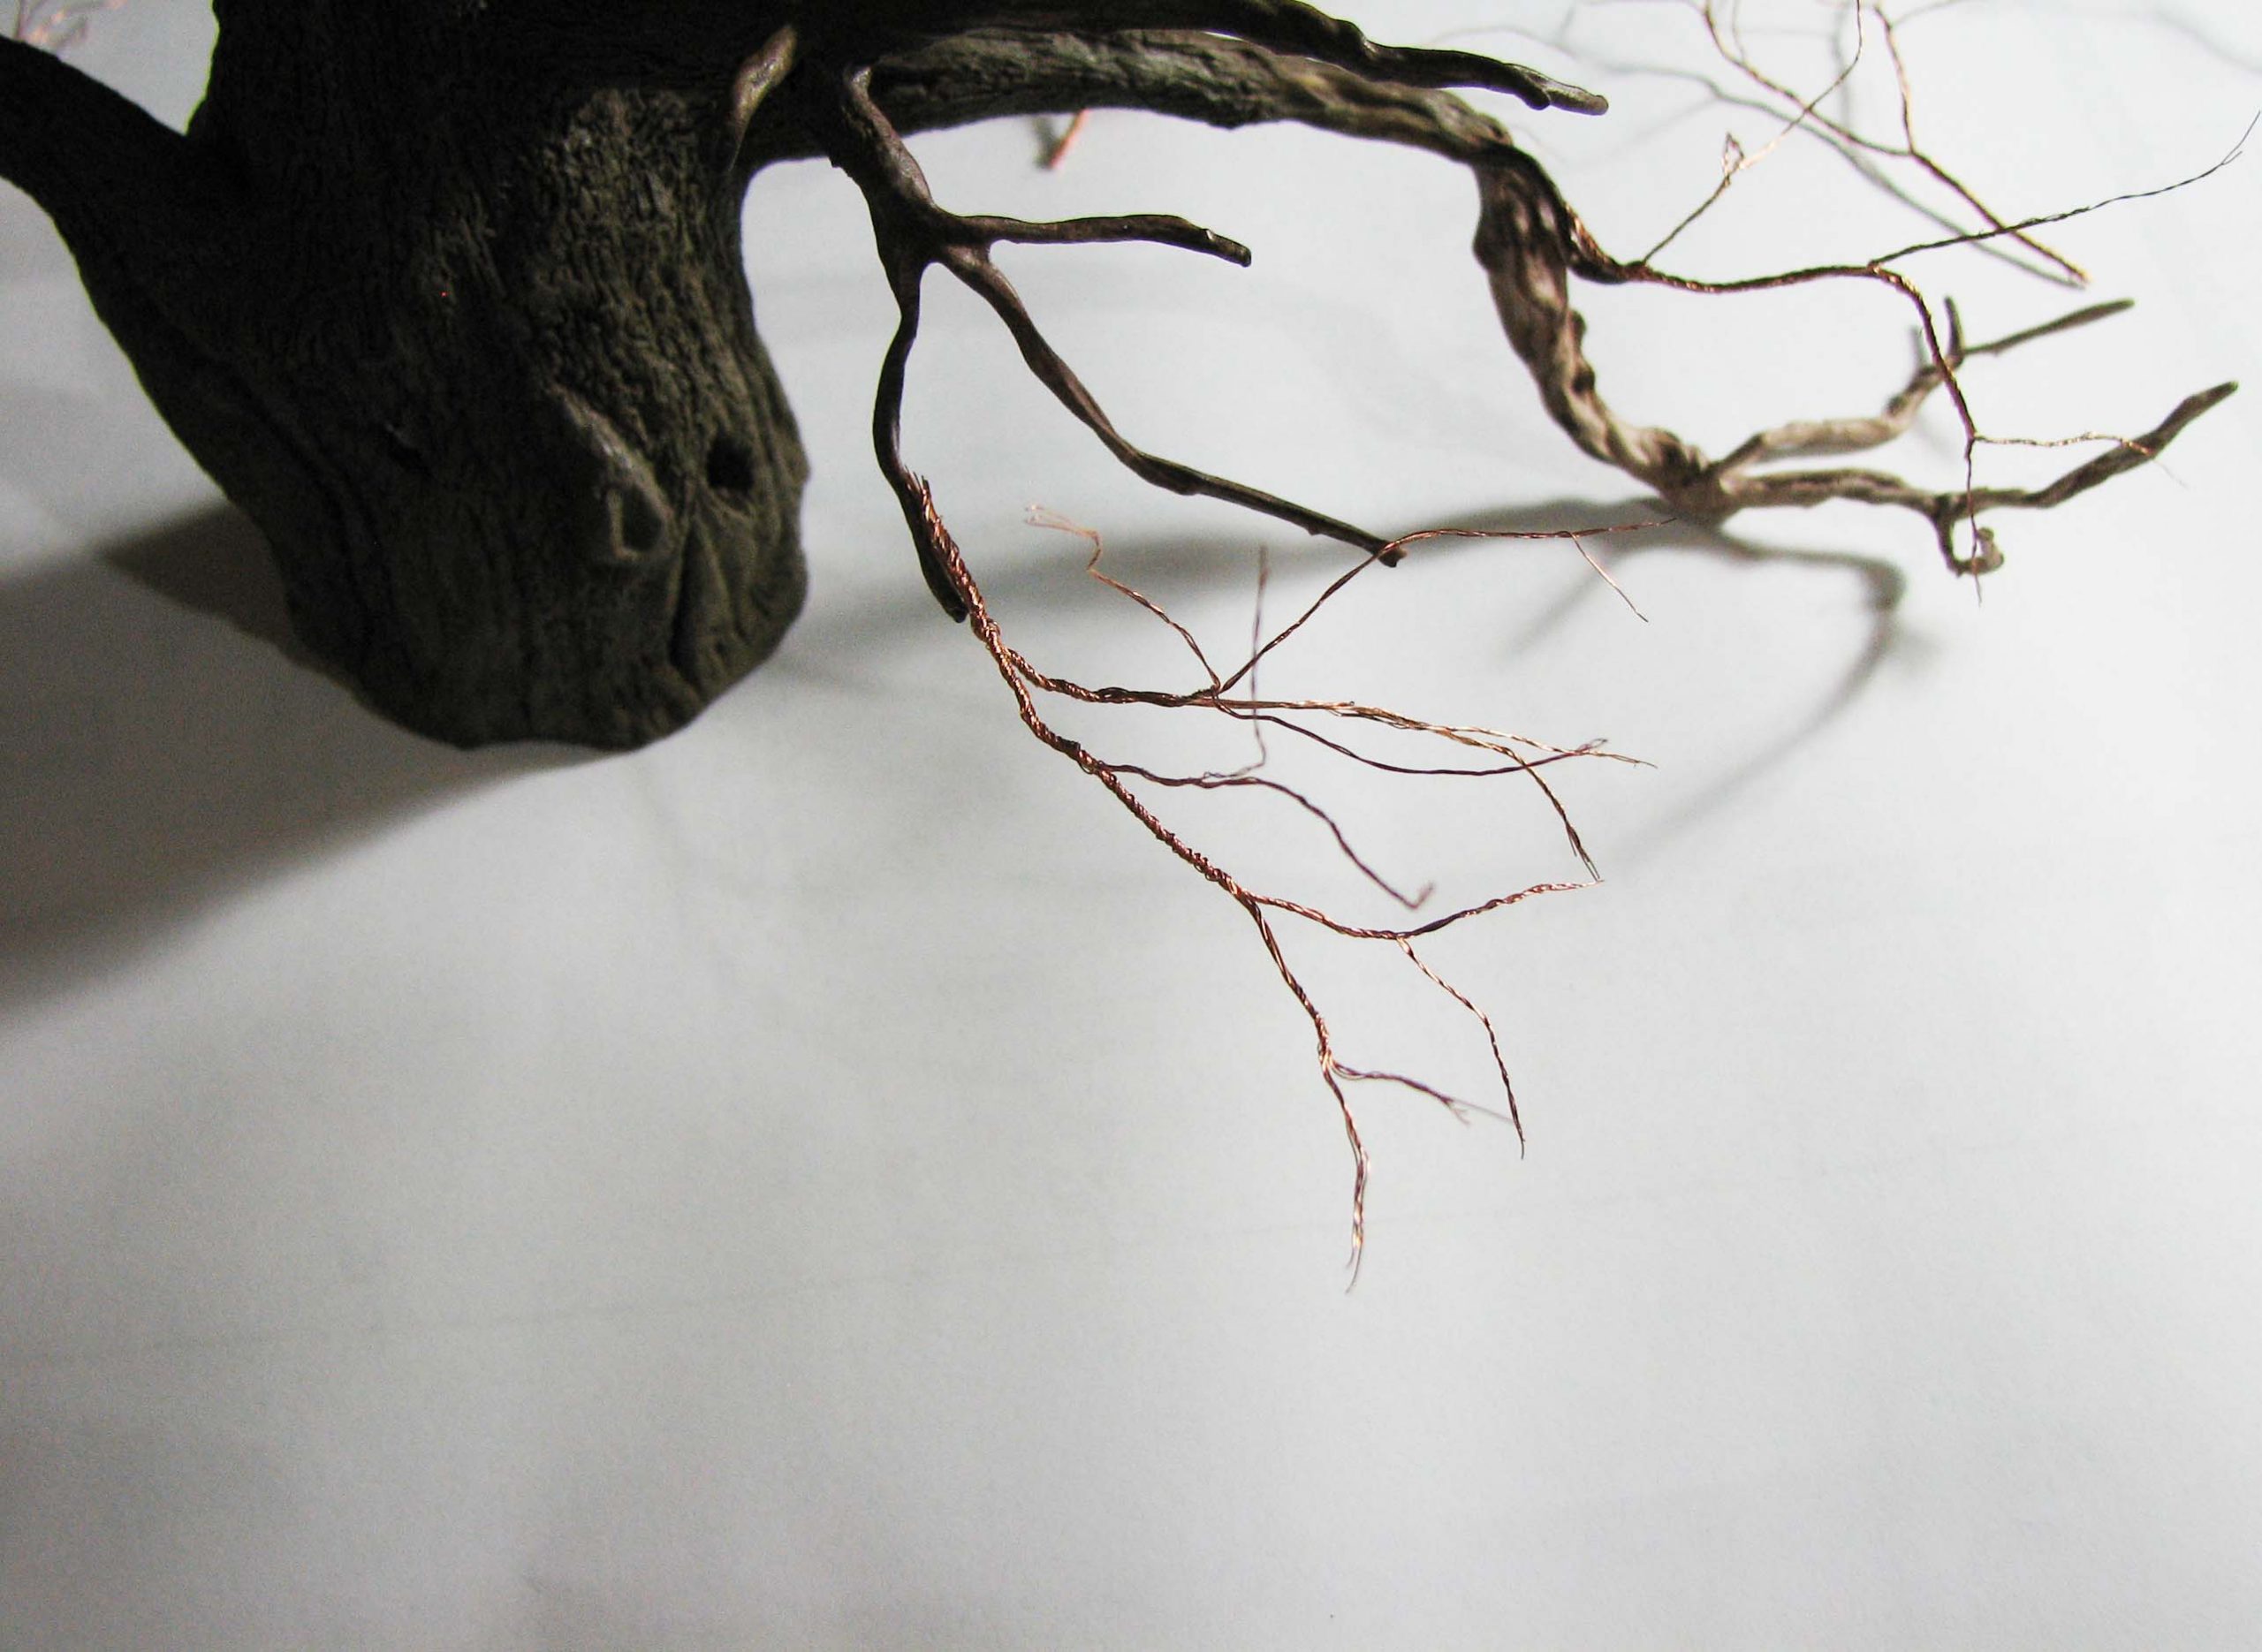 yew tree, foliage, hollow trunk, tutorial, 28mm, wargaming, daggerandbrush